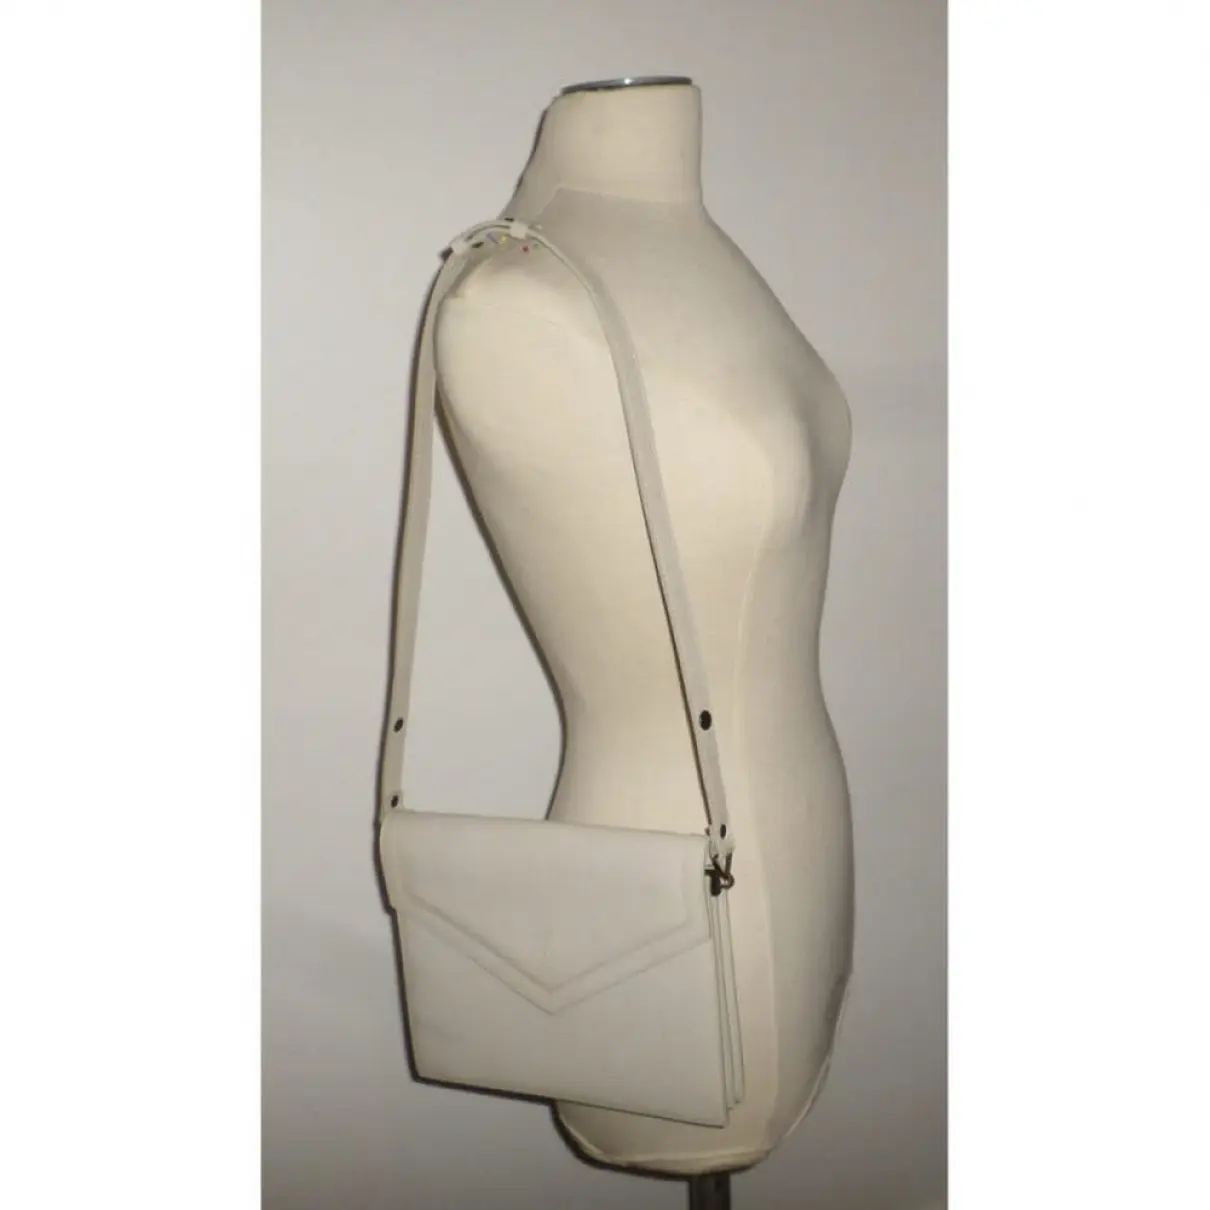 Luxury Yves Saint Laurent Handbags Women - Vintage